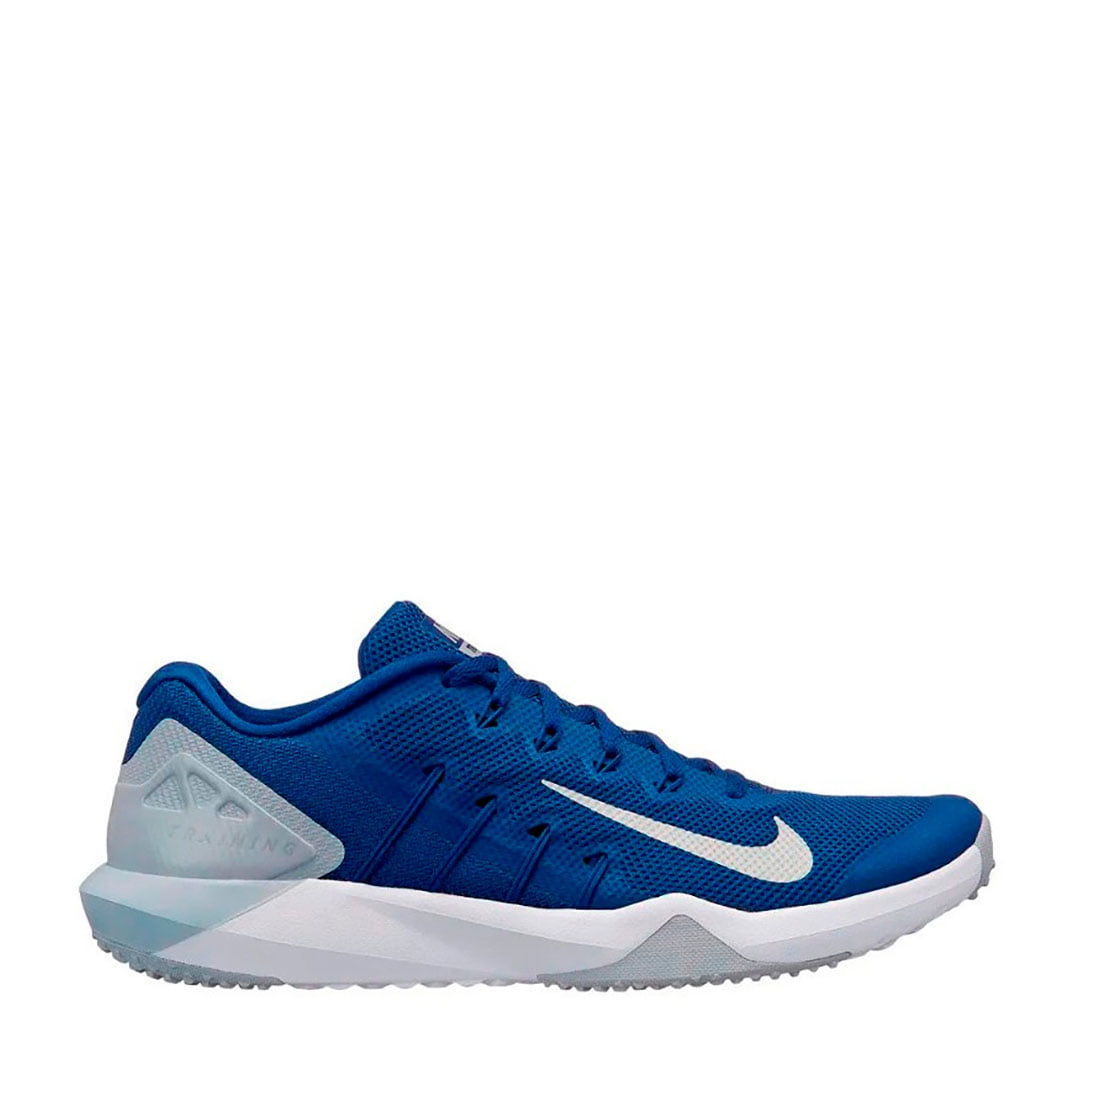 Nike Retaliation TR 2 Unisex/Adult shoe 10 Casual AA7063-402 Dark Blue - Walmart.com